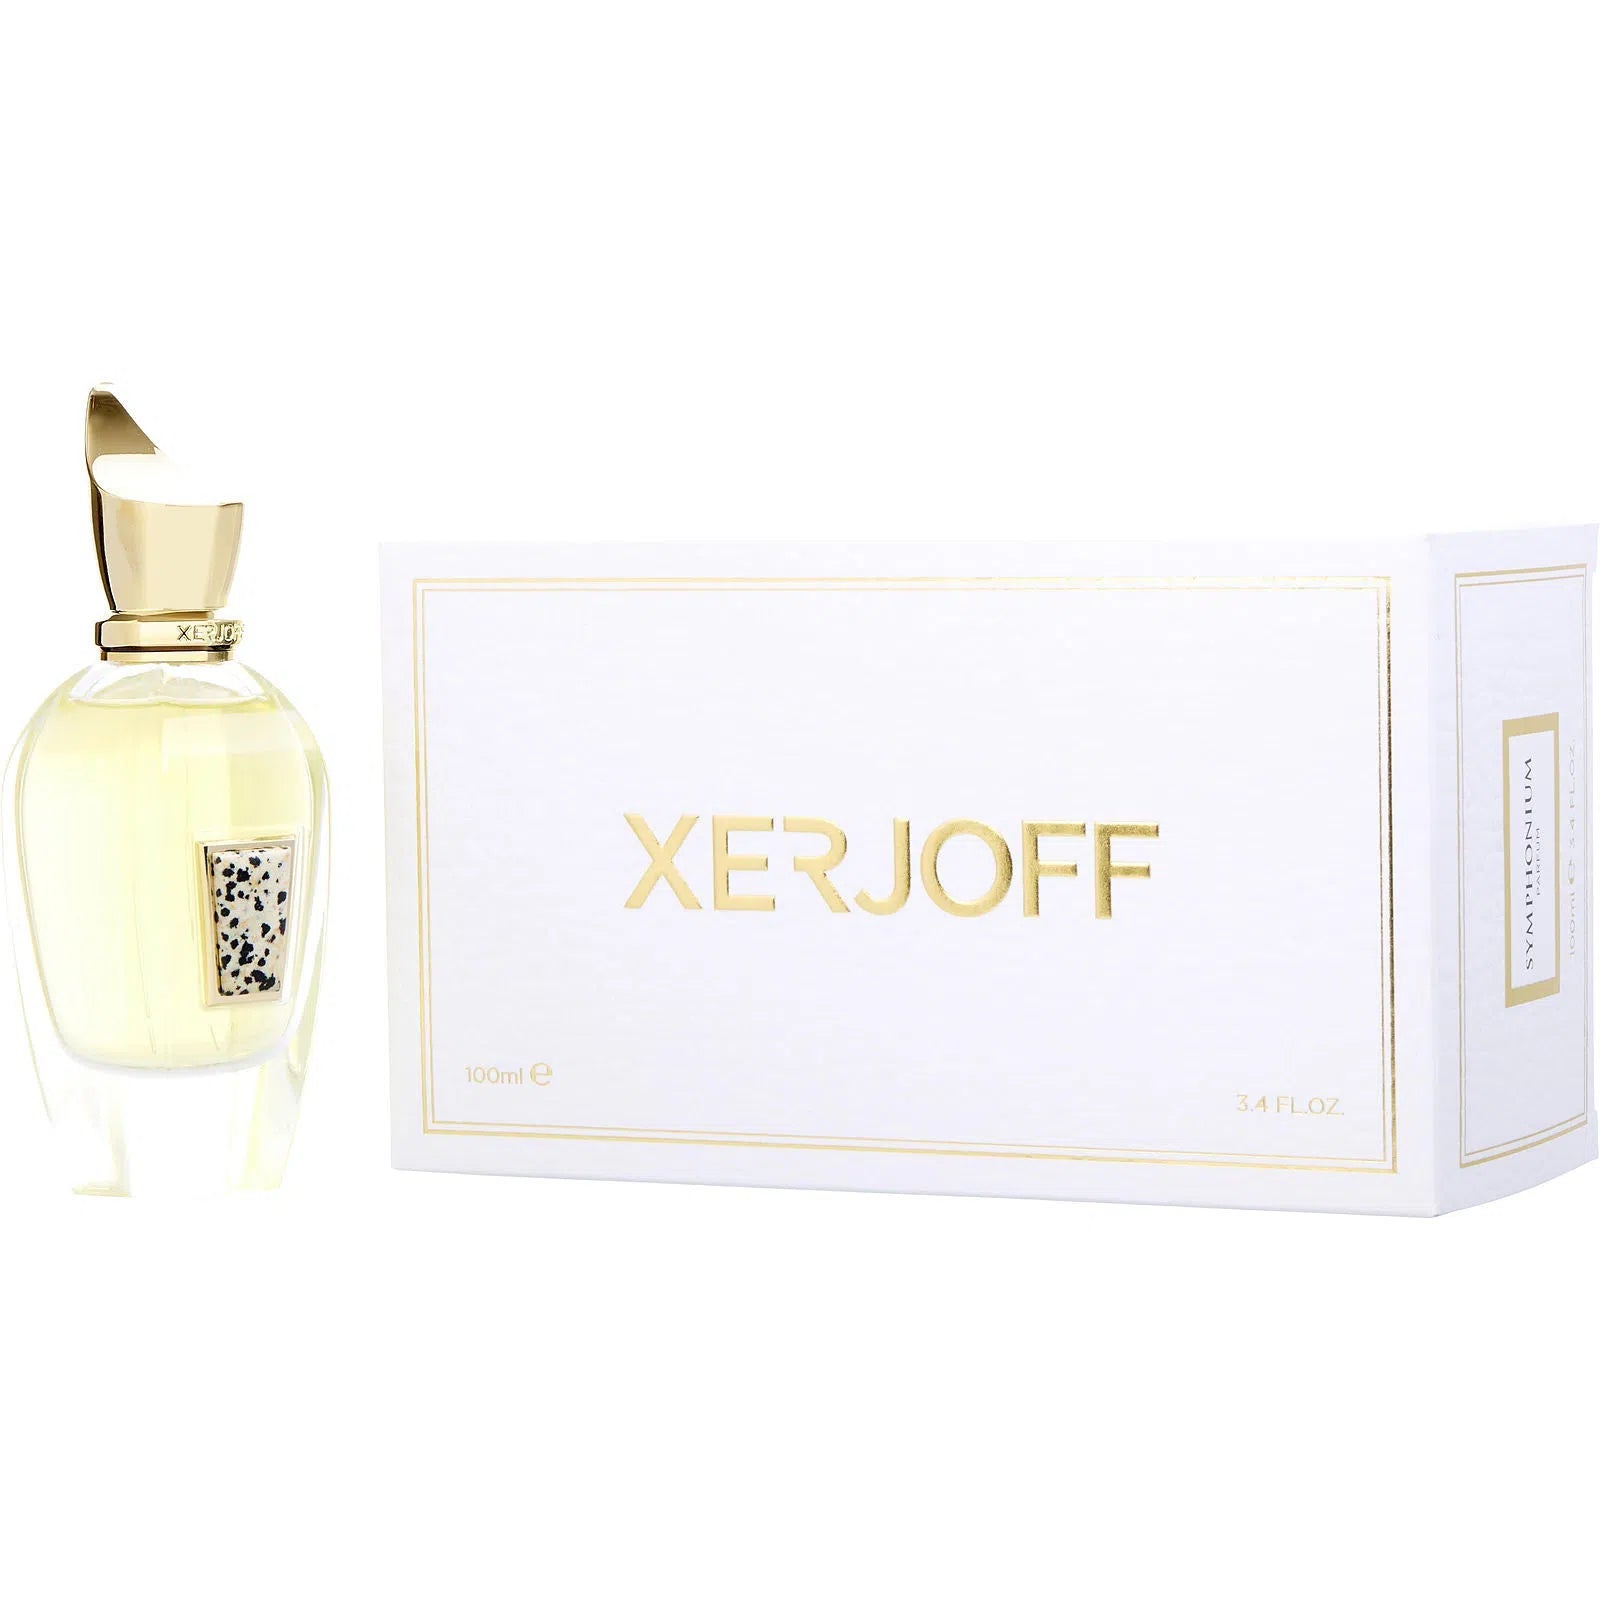 Perfume Xerjoff 17/17 Stone Label Symphonium Parfum (U) / 100 ml - 8033488155551- 1 - Prive Perfumes Honduras